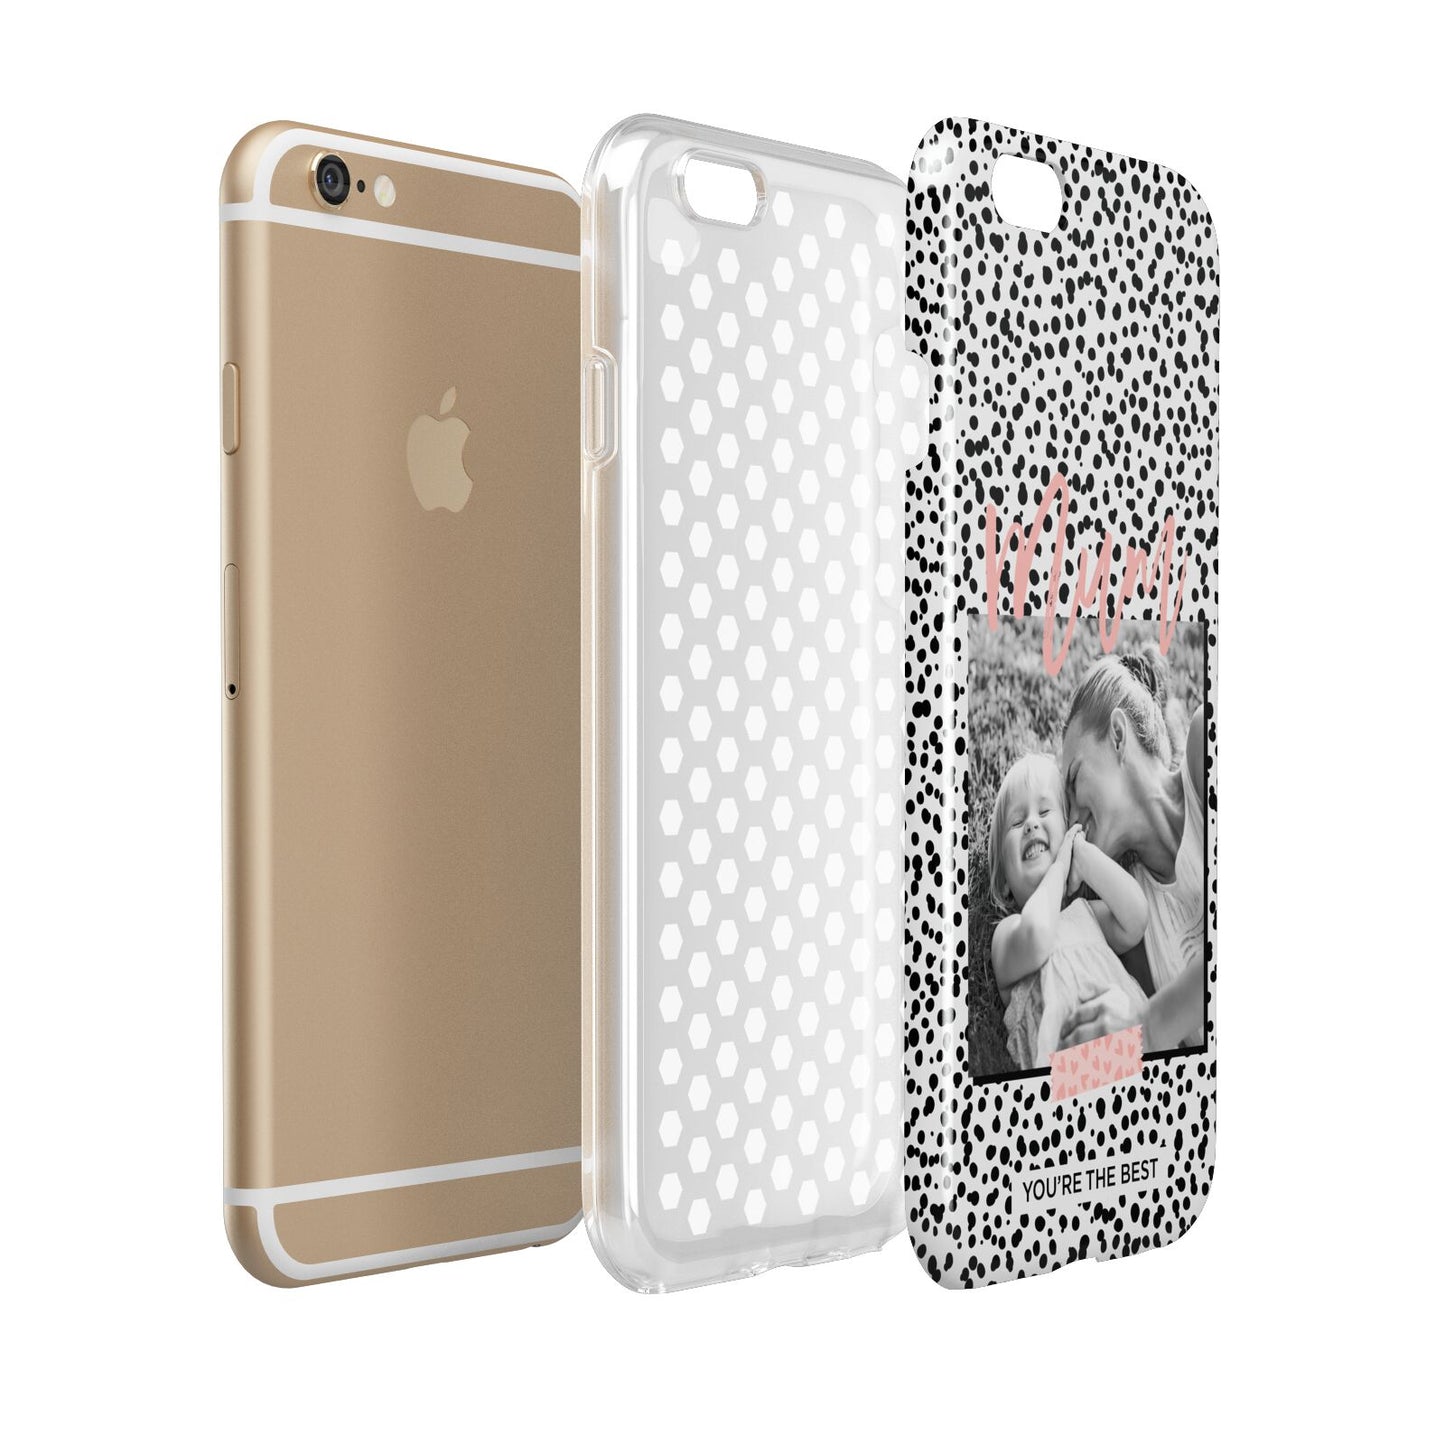 Polka Dot Mum Apple iPhone 6 3D Tough Case Expanded view